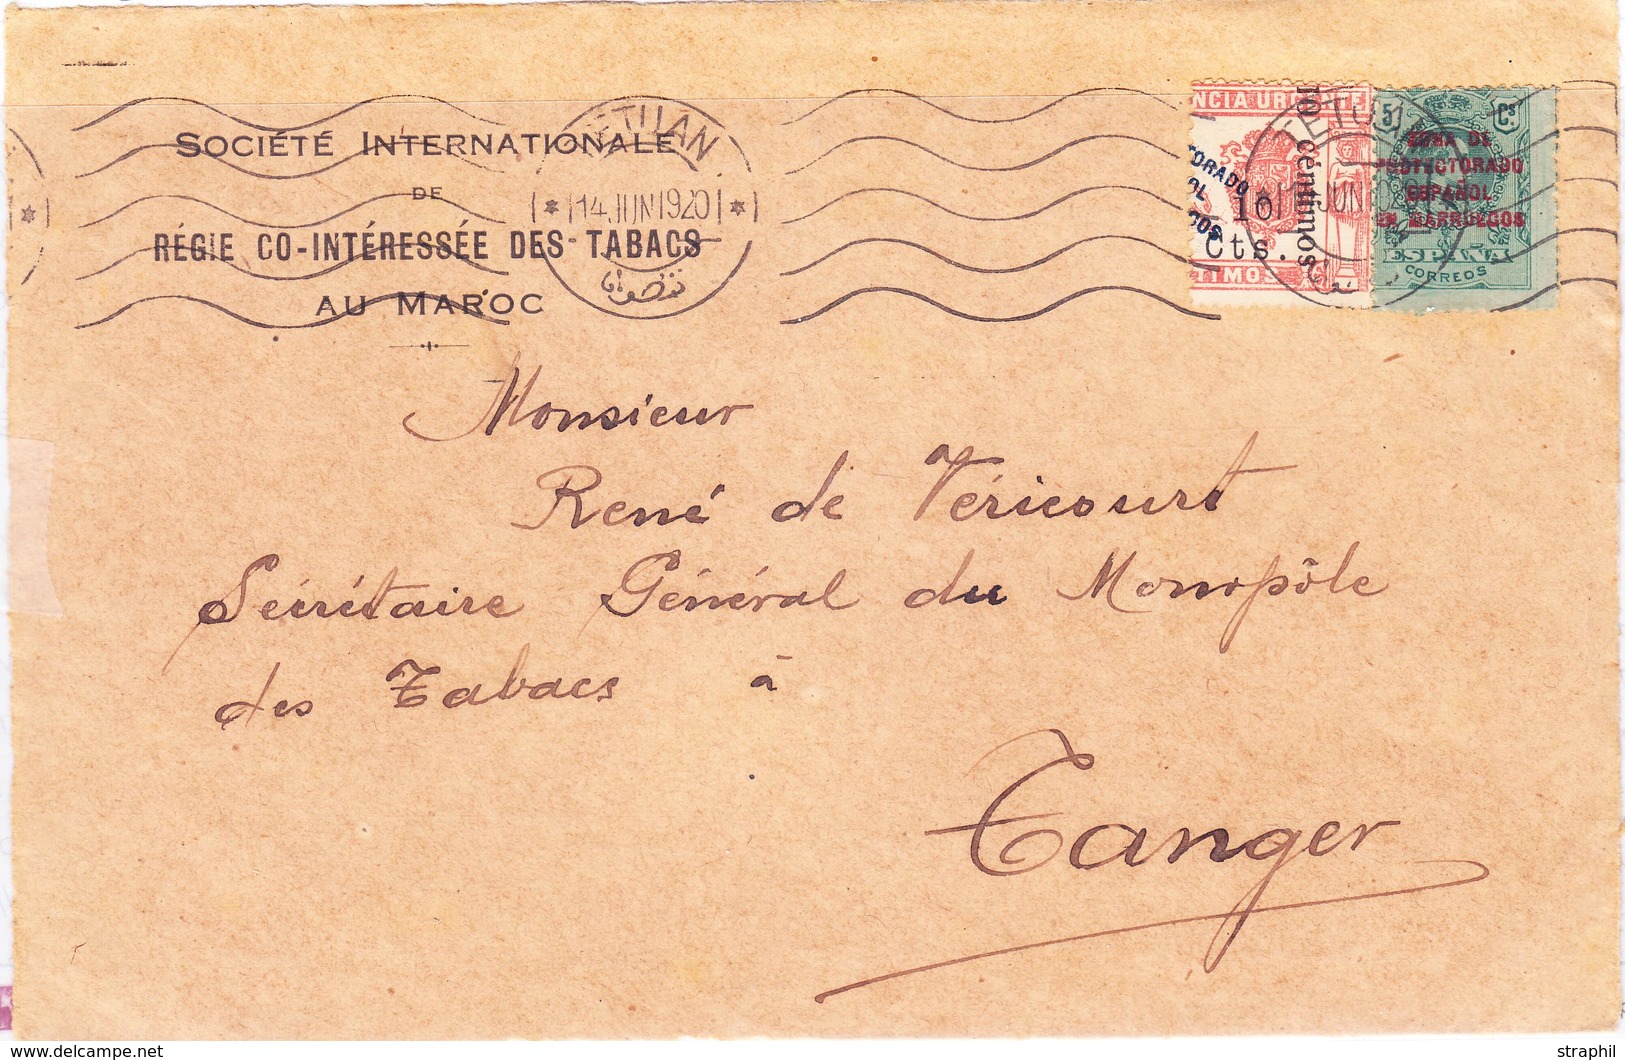 DEV N°67, 75 - Obl. TETOUAN - 14/6/20 - Pr Tanger - TB - Spanish Morocco